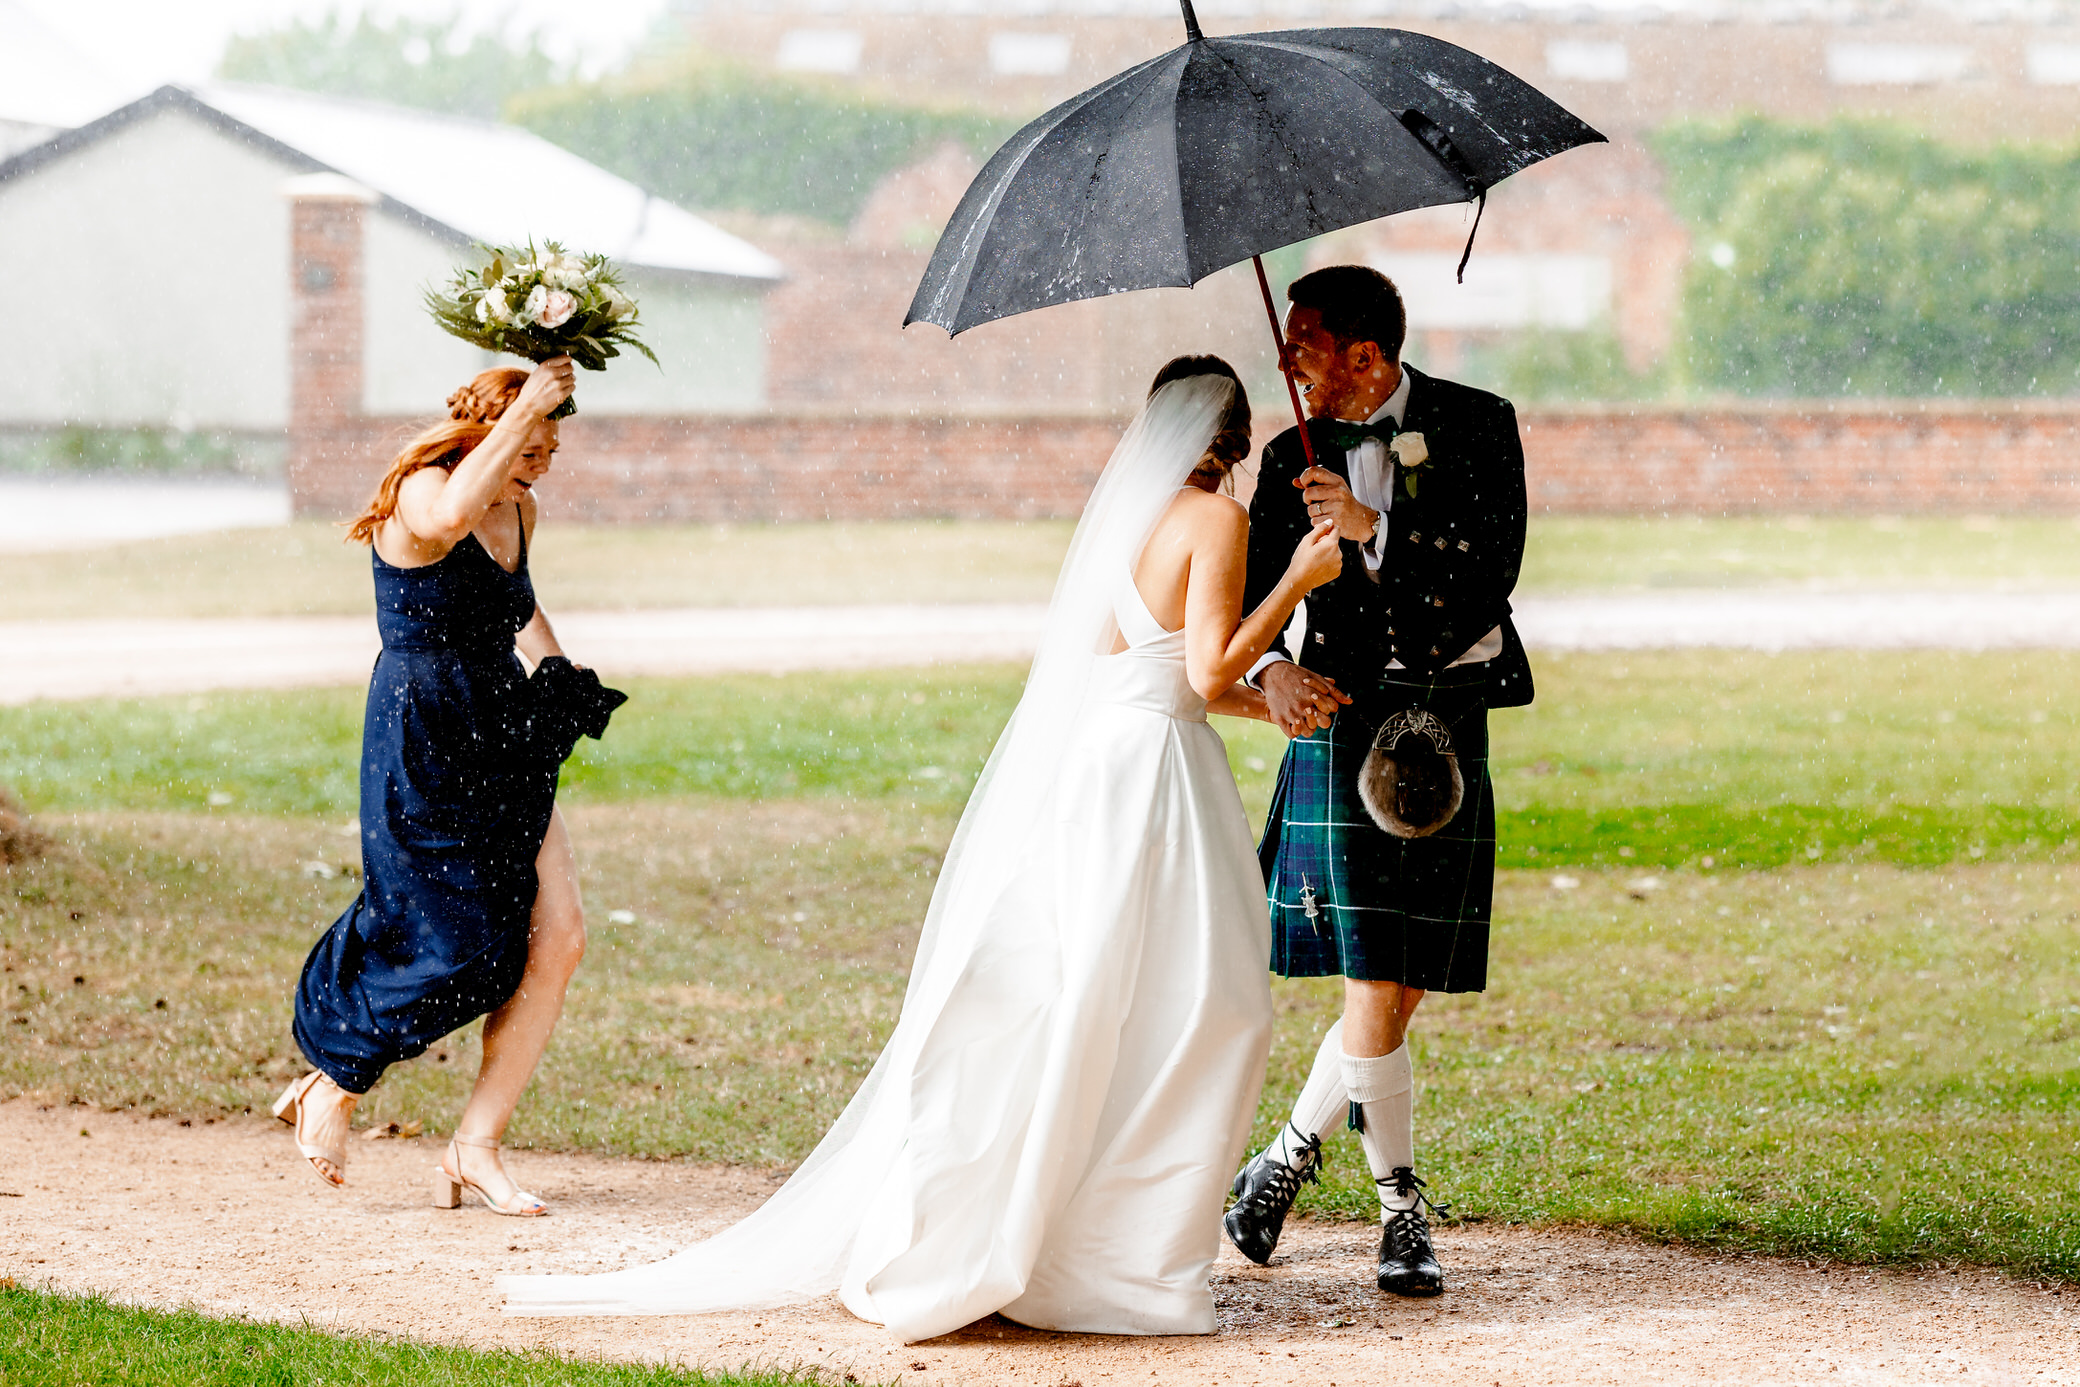 Sant Ffread House Wedding - Escaping the rain